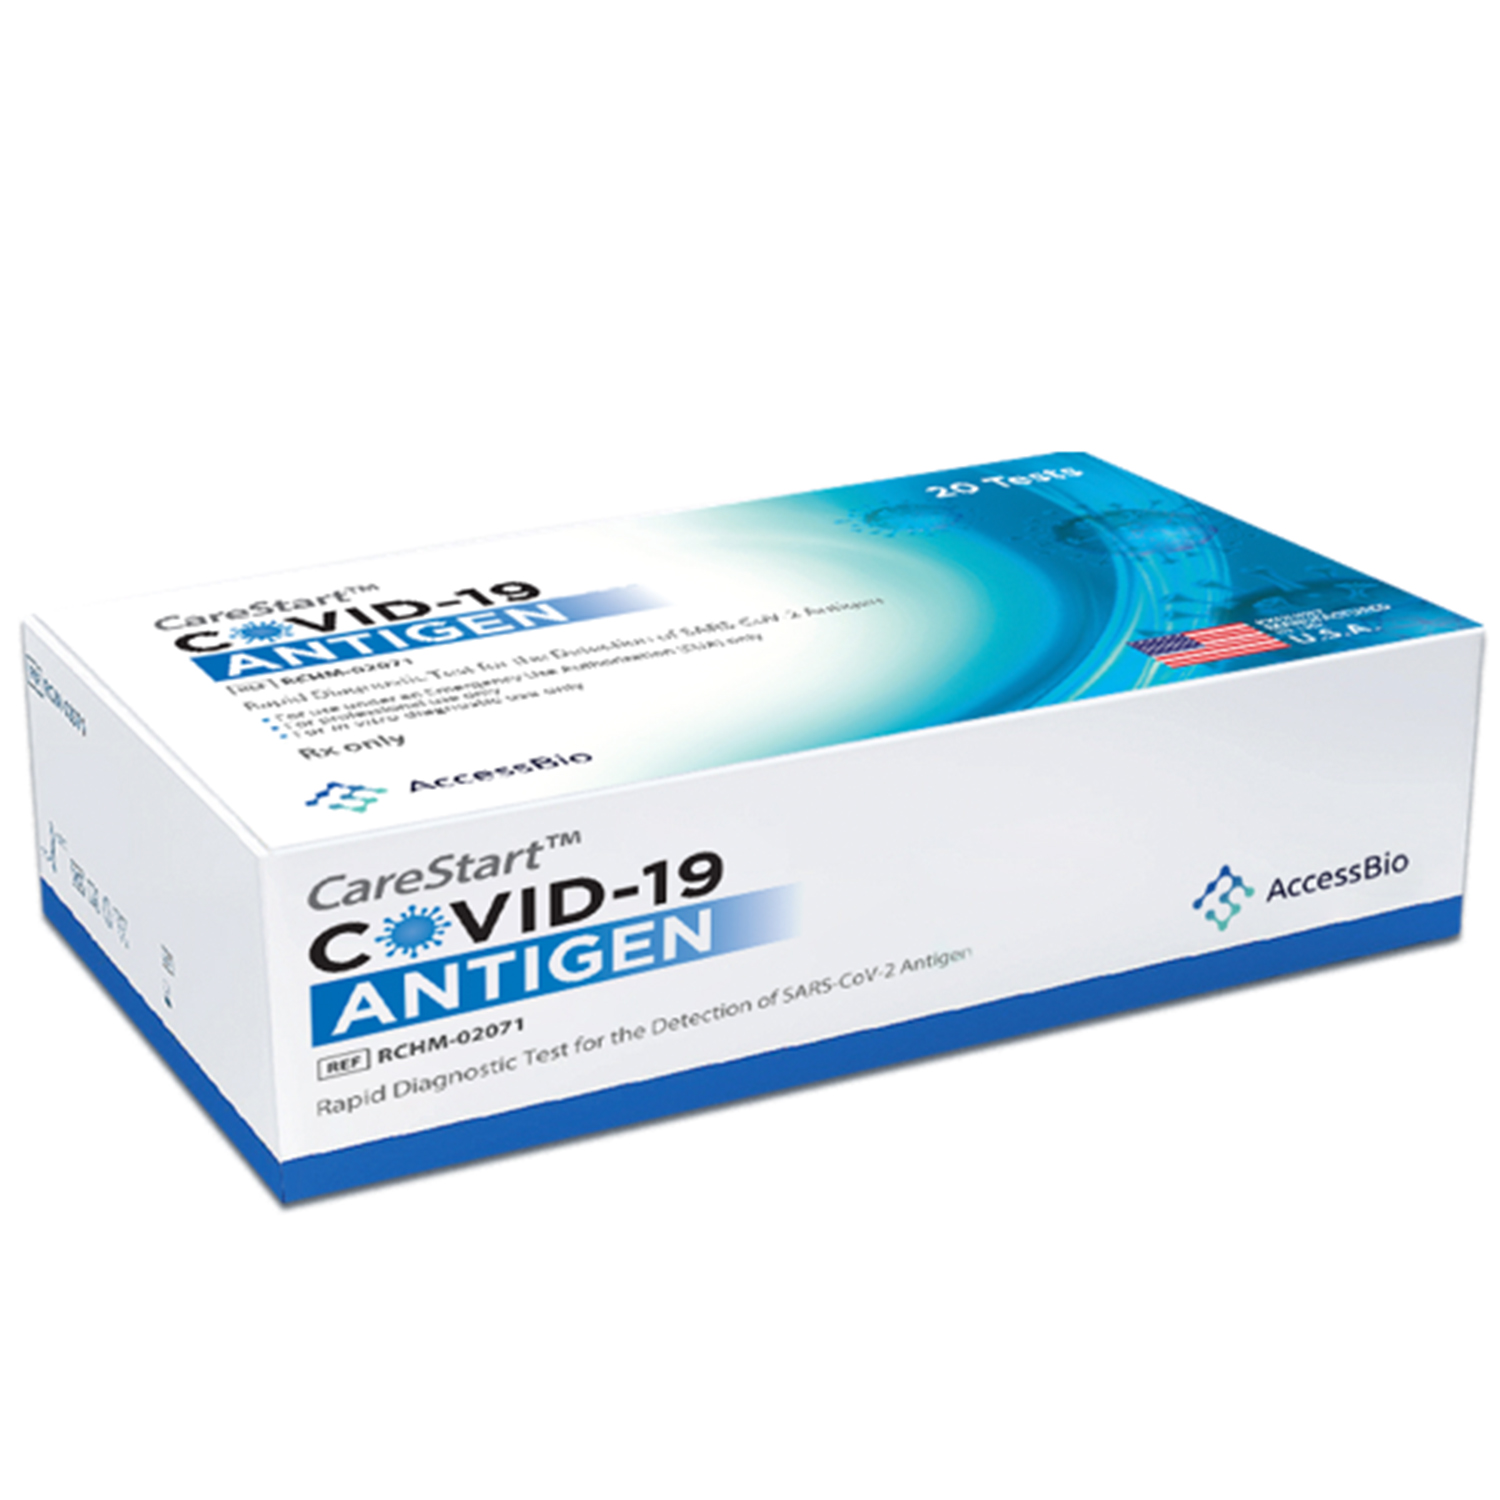 Carestart Covid 19 Antigen Rapid Test Device - 20 Tests